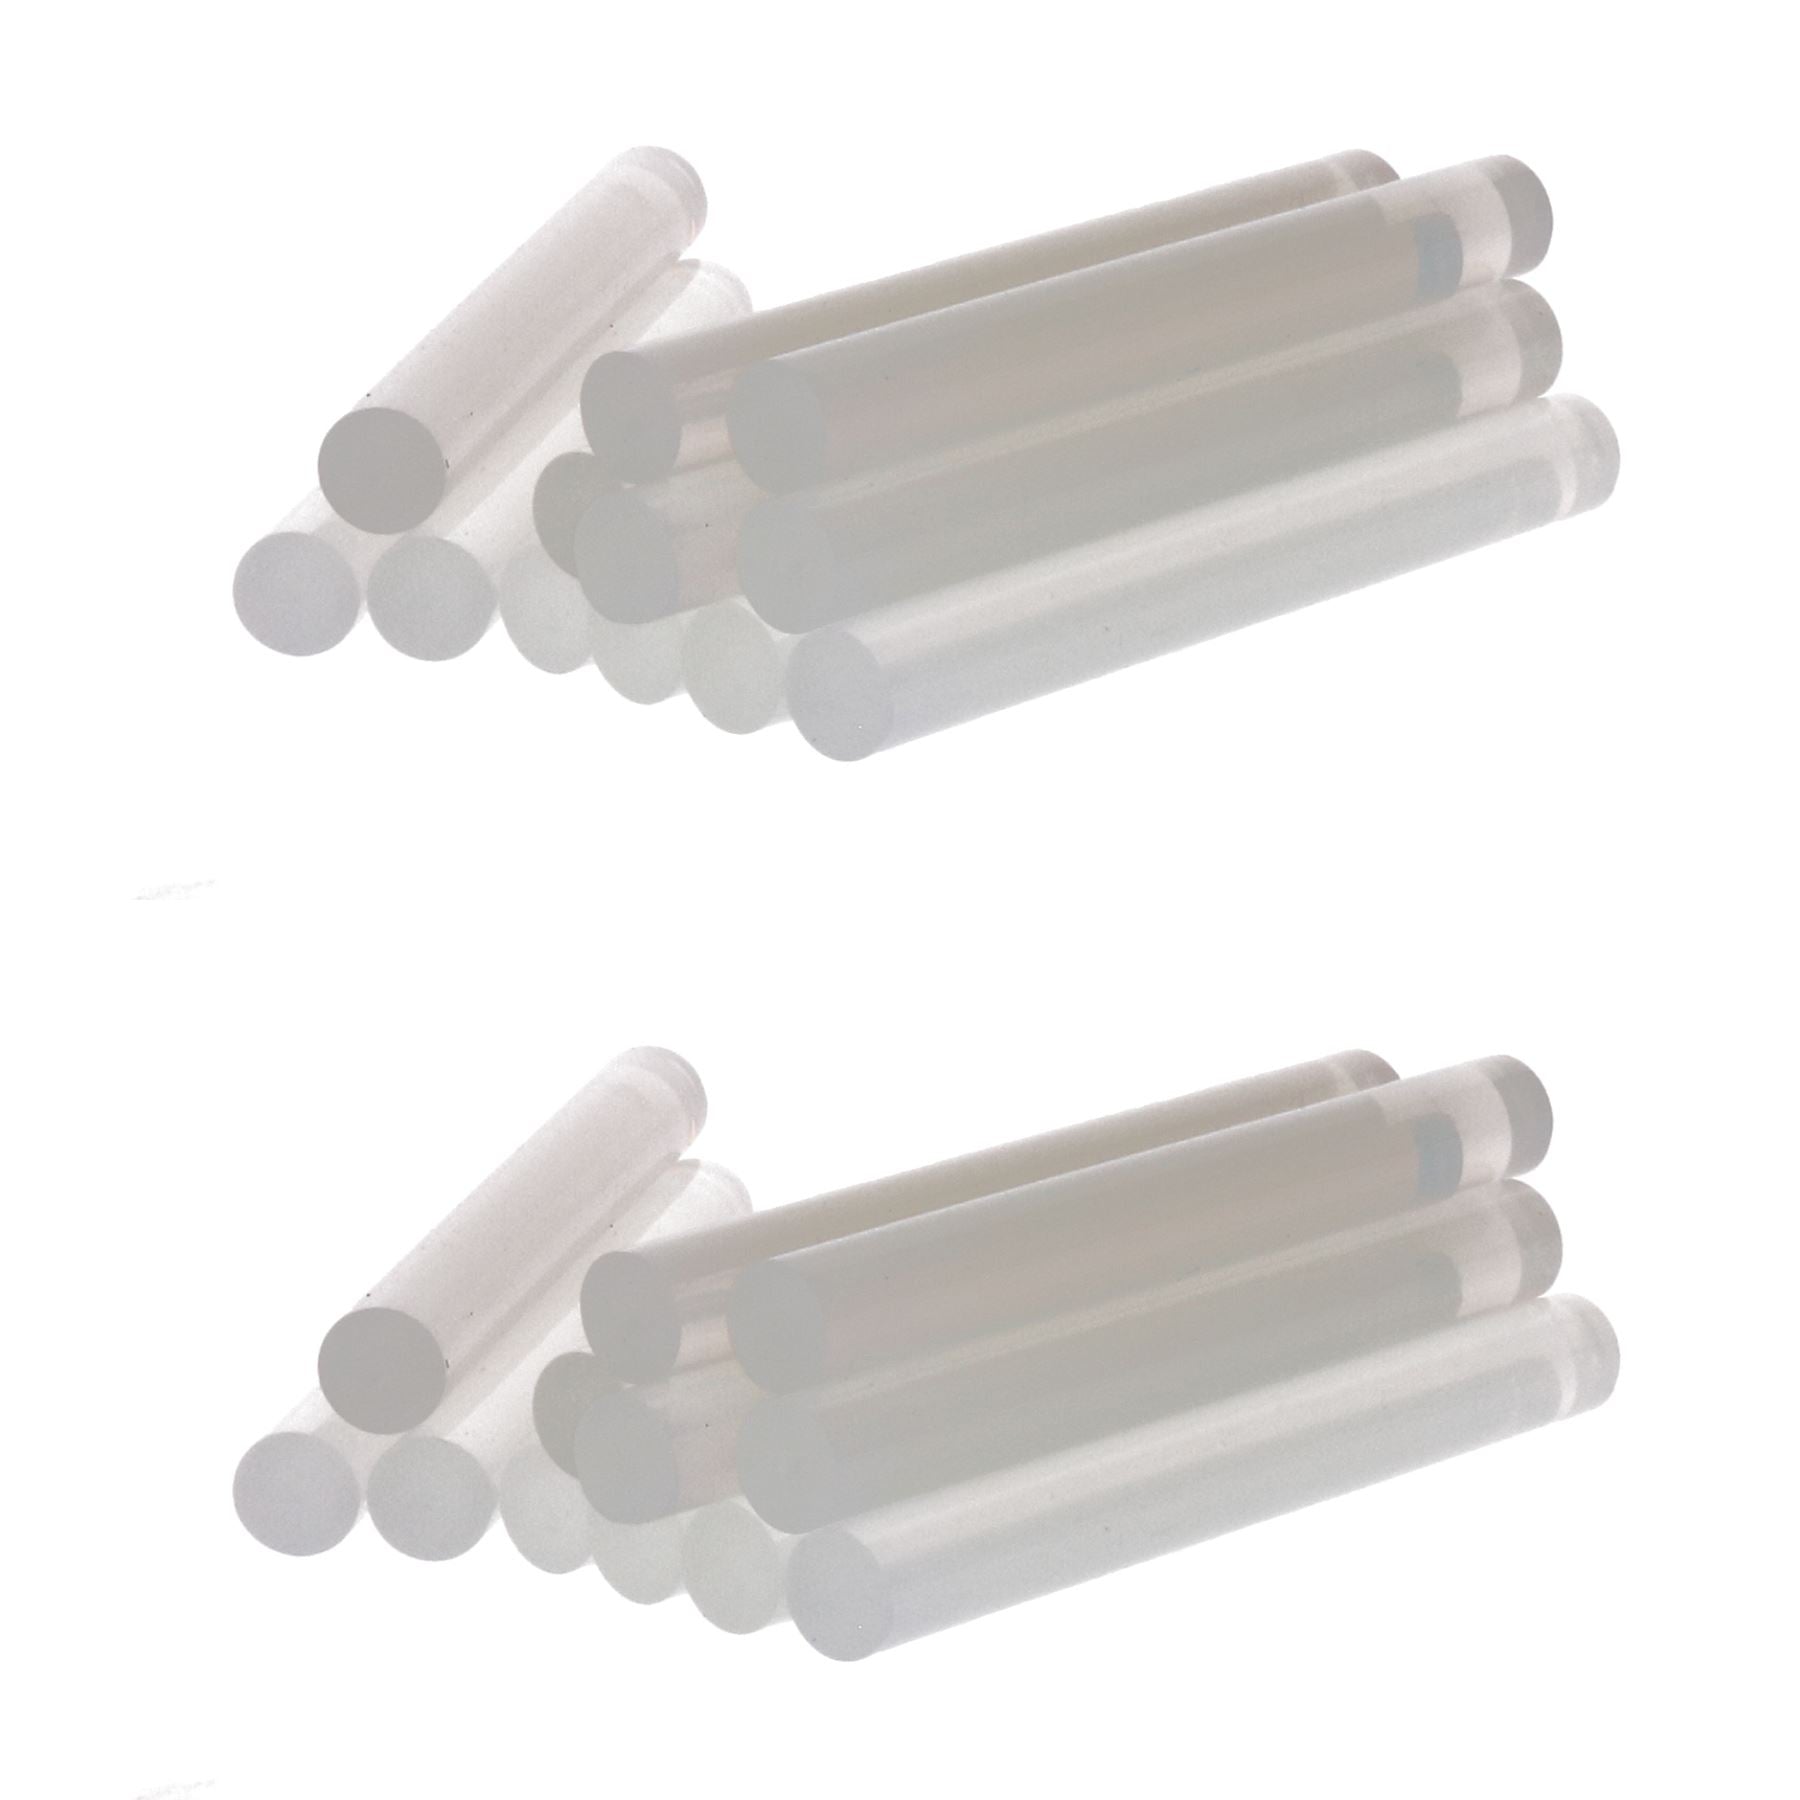 Multipack Hot Melt Glue Gun Sticks Adhesive 100 x 11mm for Electric Glue Guns